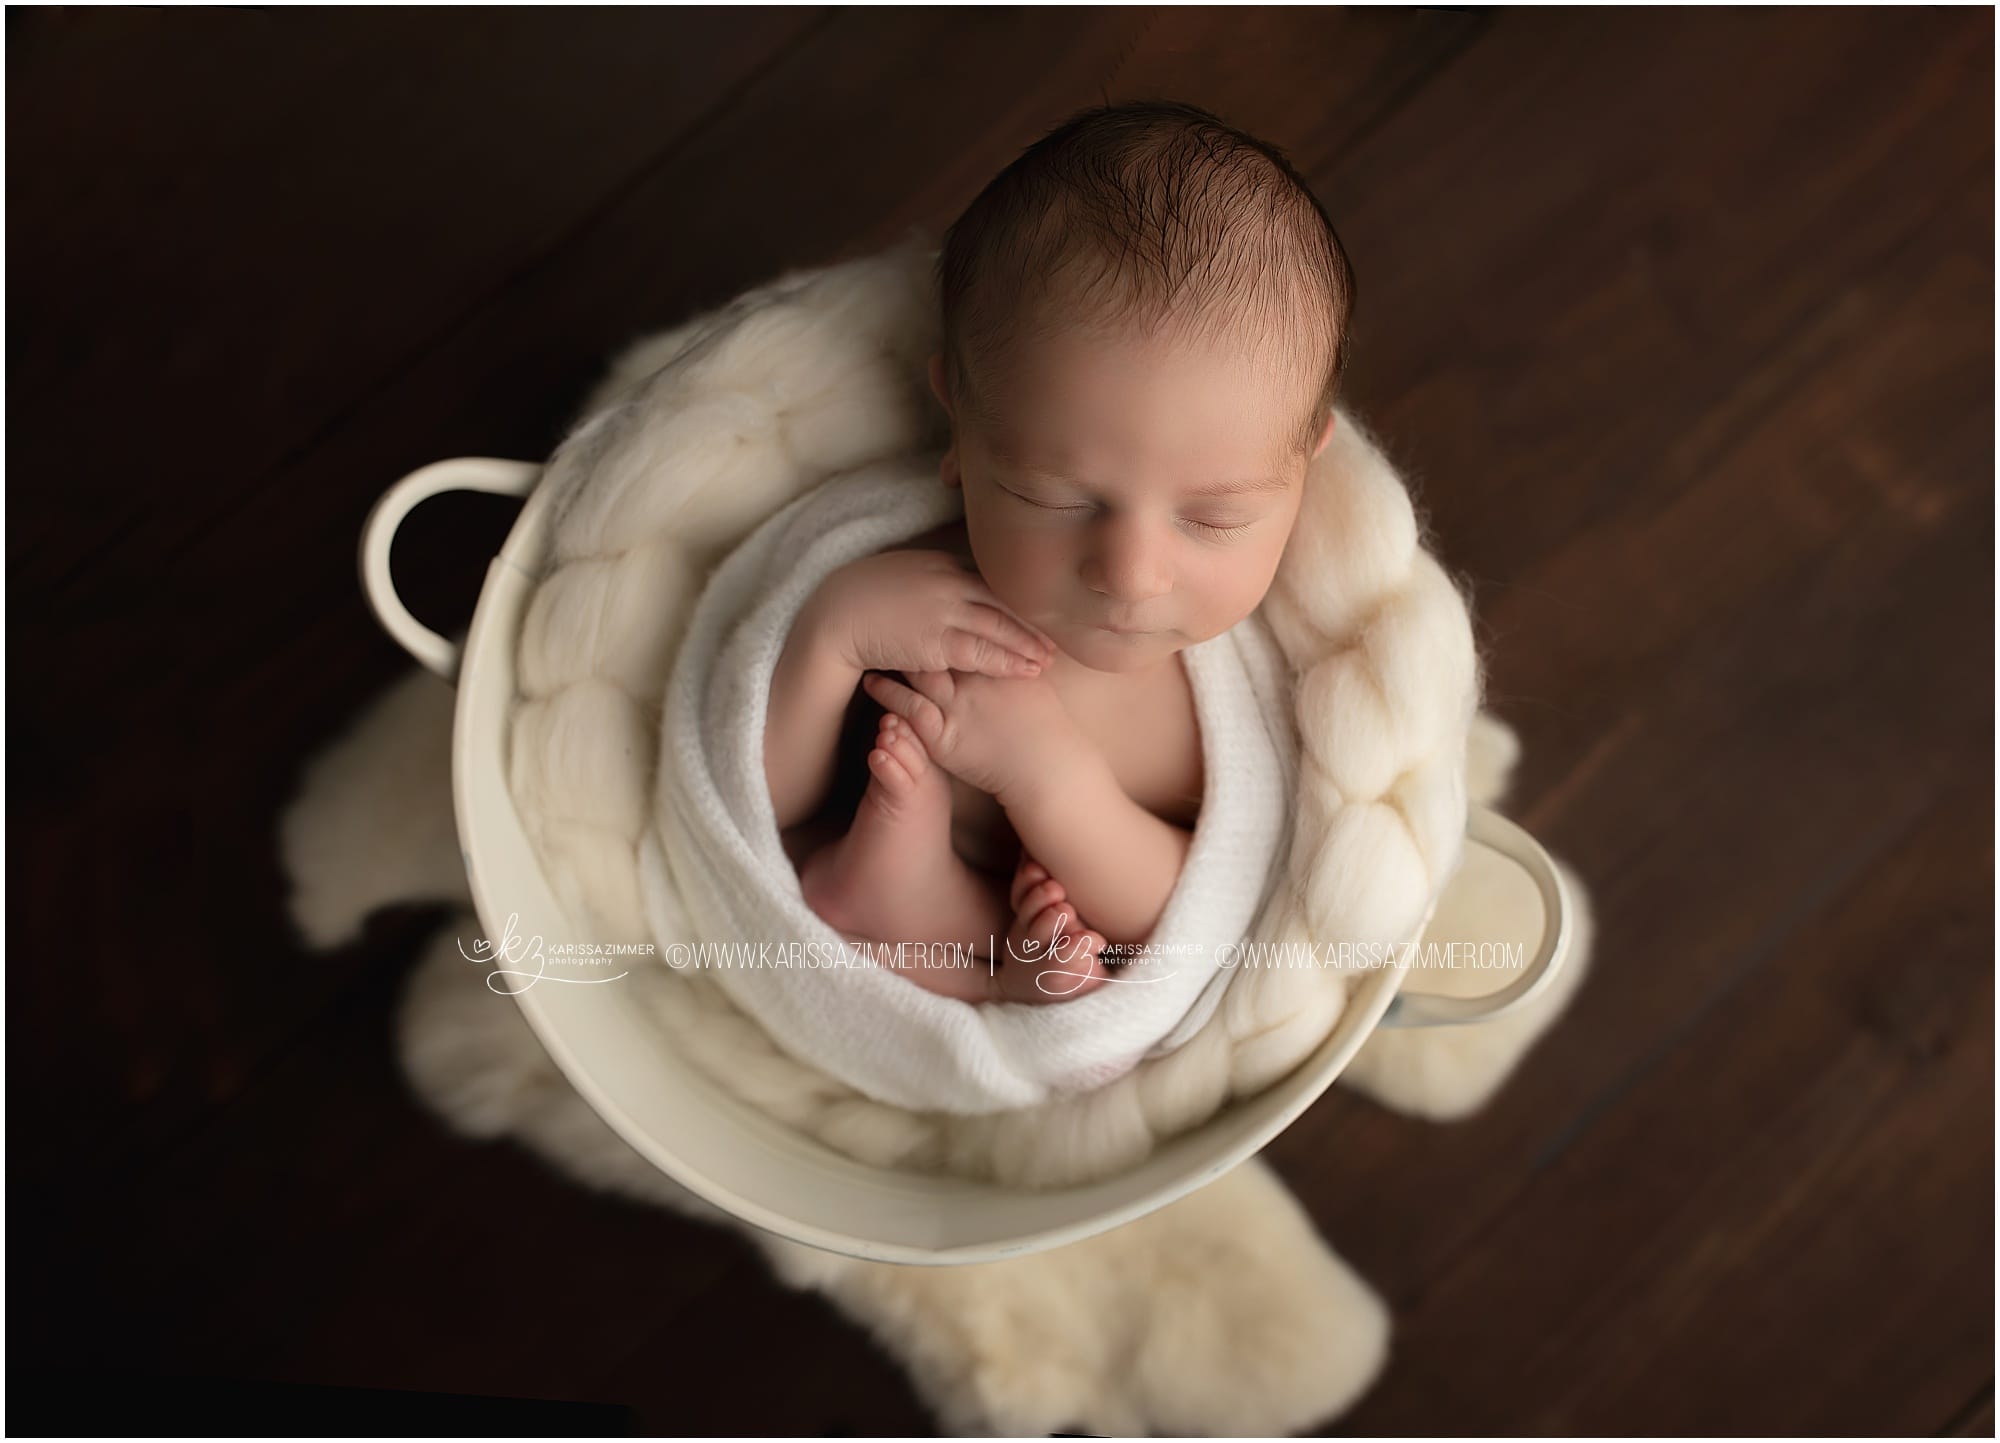 Newborn Baby boy photographed in bucket by Karissa Zimmer Photography